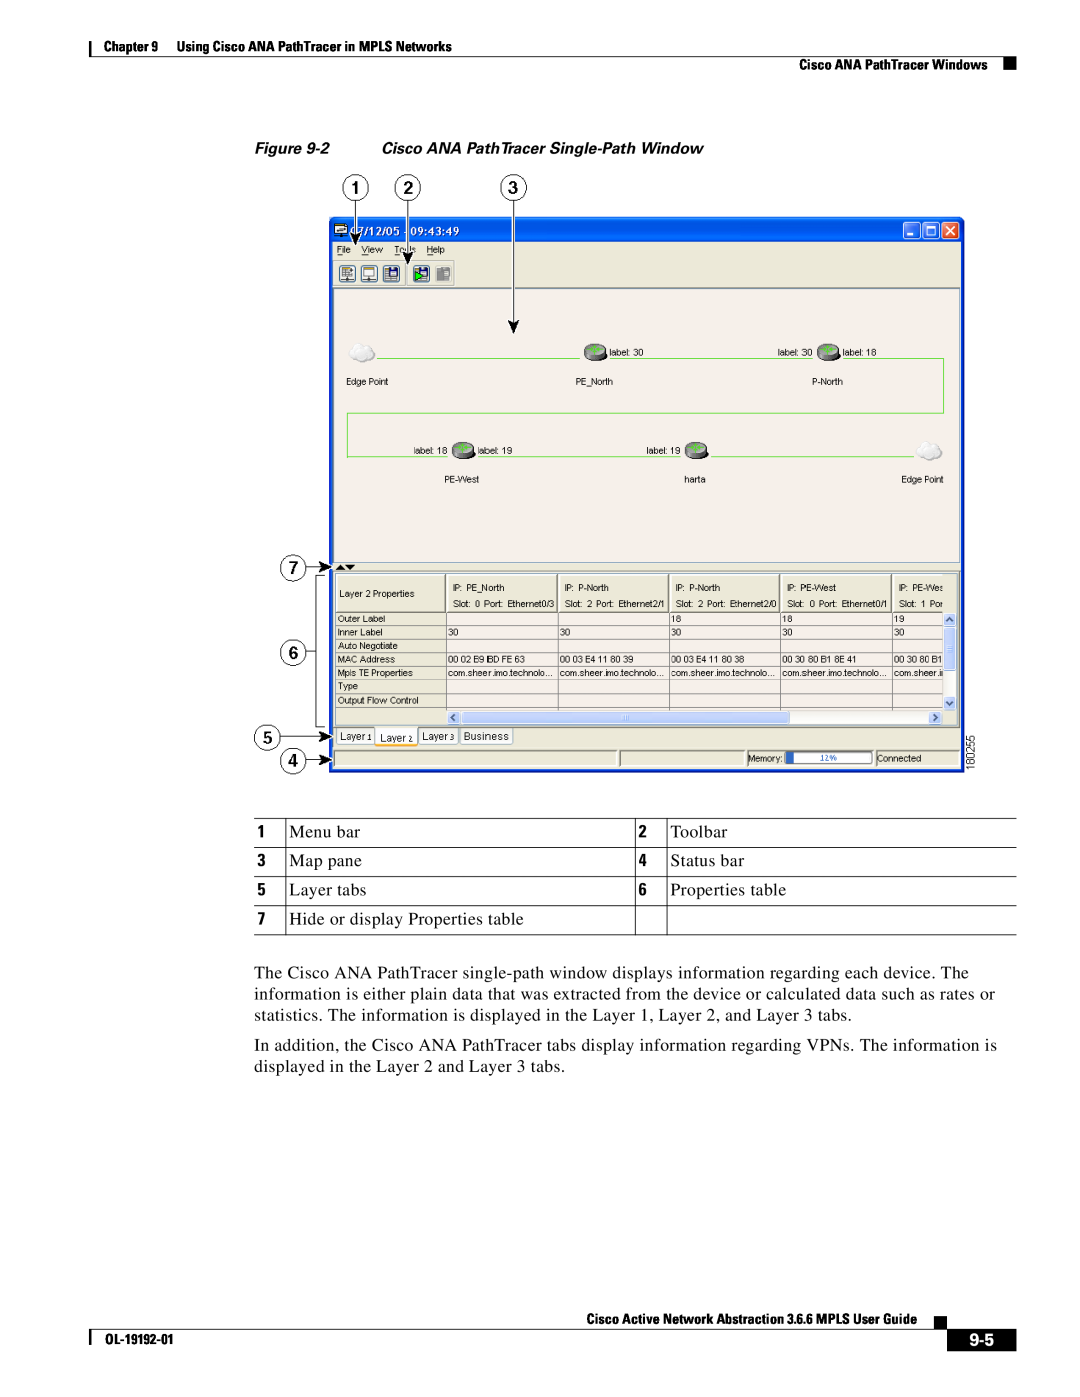 Cisco Systems 3.6.6 manual Layer tabs, Hide or display Properties table, Menu bar, Toolbar, Map pane, Status bar 